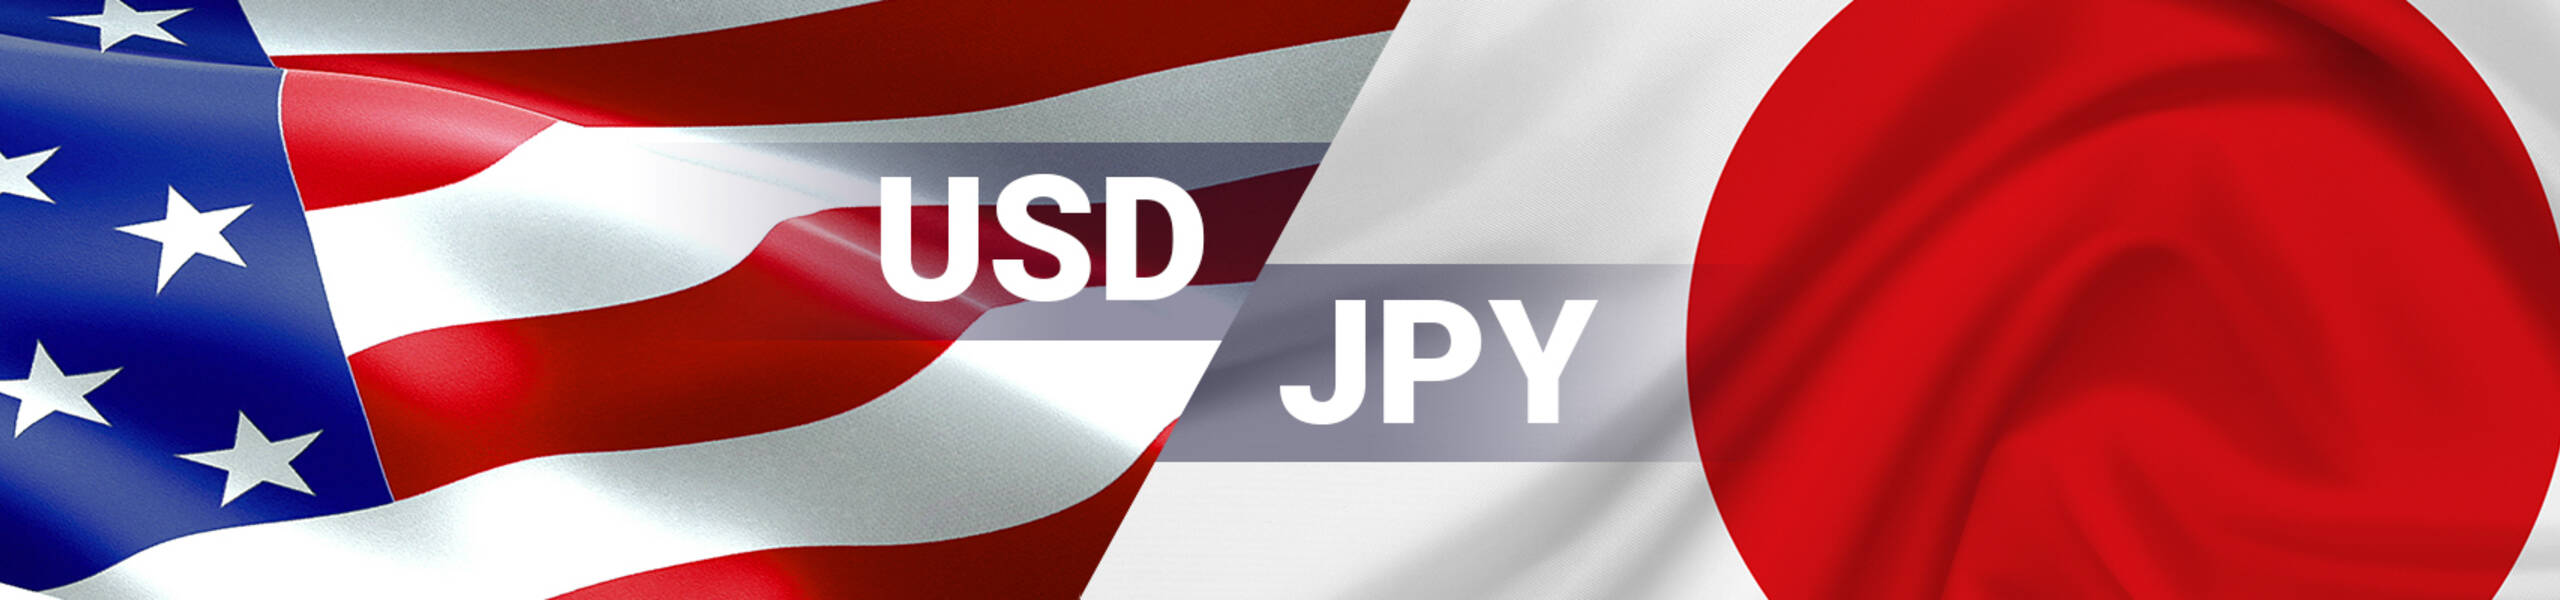 USD/JPY: dollar is oversold